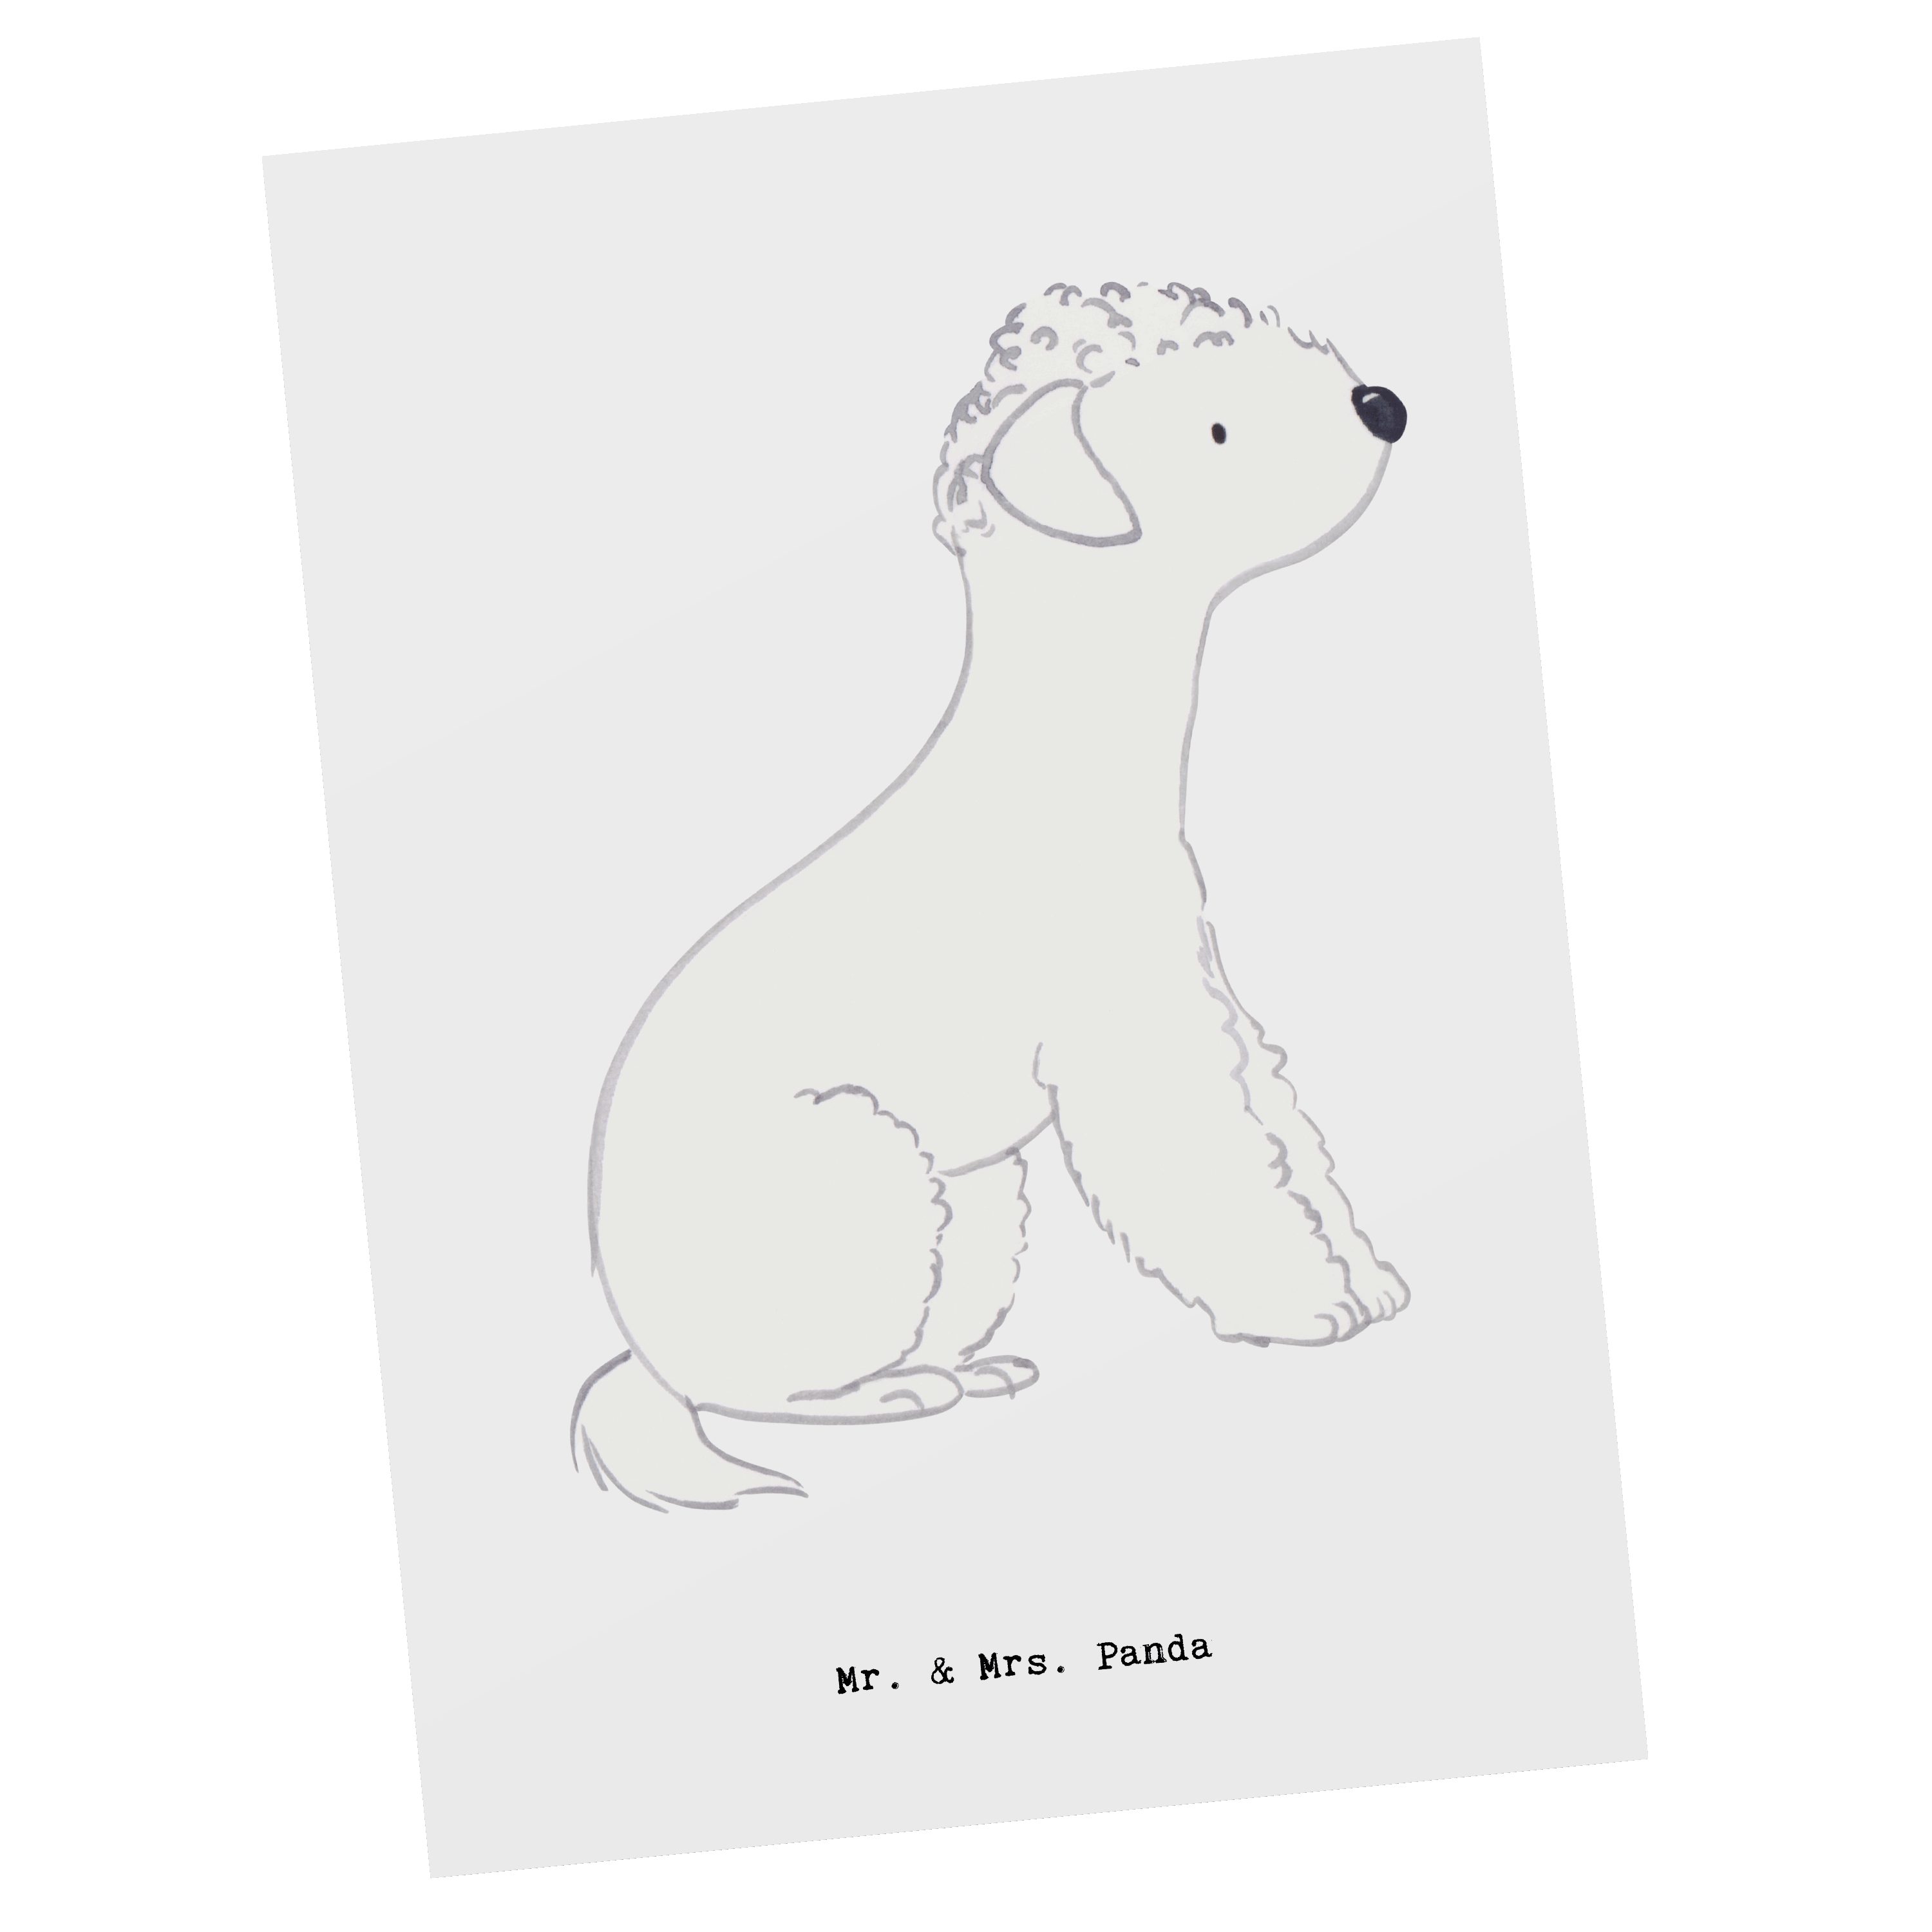 Mr. & Mrs. Panda Postkarte Bedlington Terrier Lebensretter - Weiß - Geschenk, Karte, Einladung